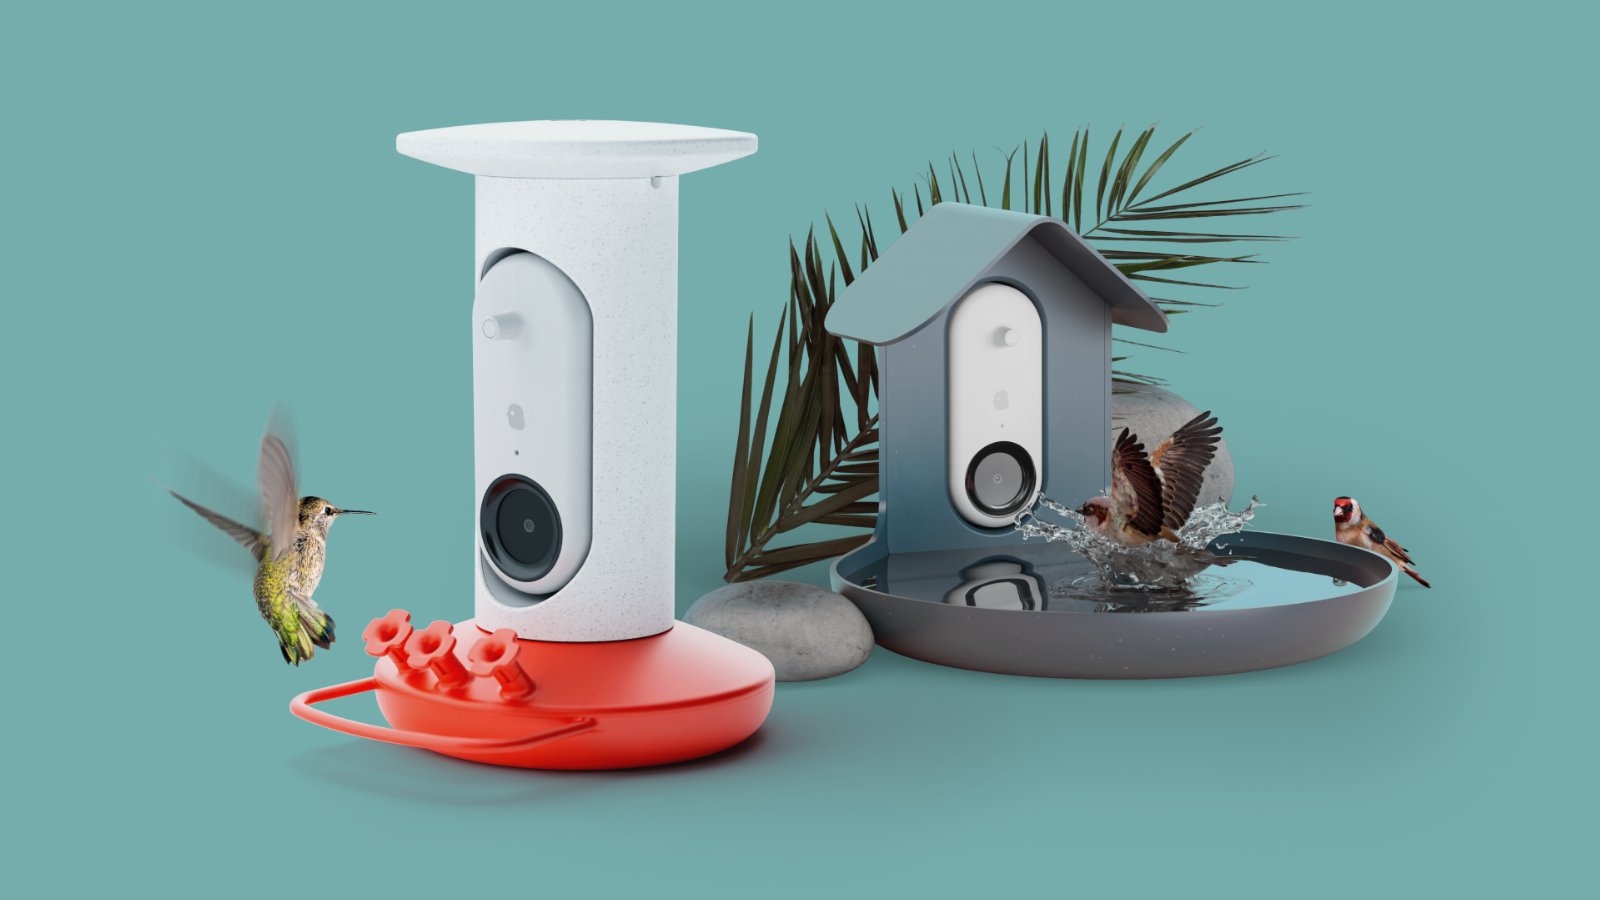 Bird Buddy introduces an AI-powered Smart Hummingbird Feeder and Bird Bath